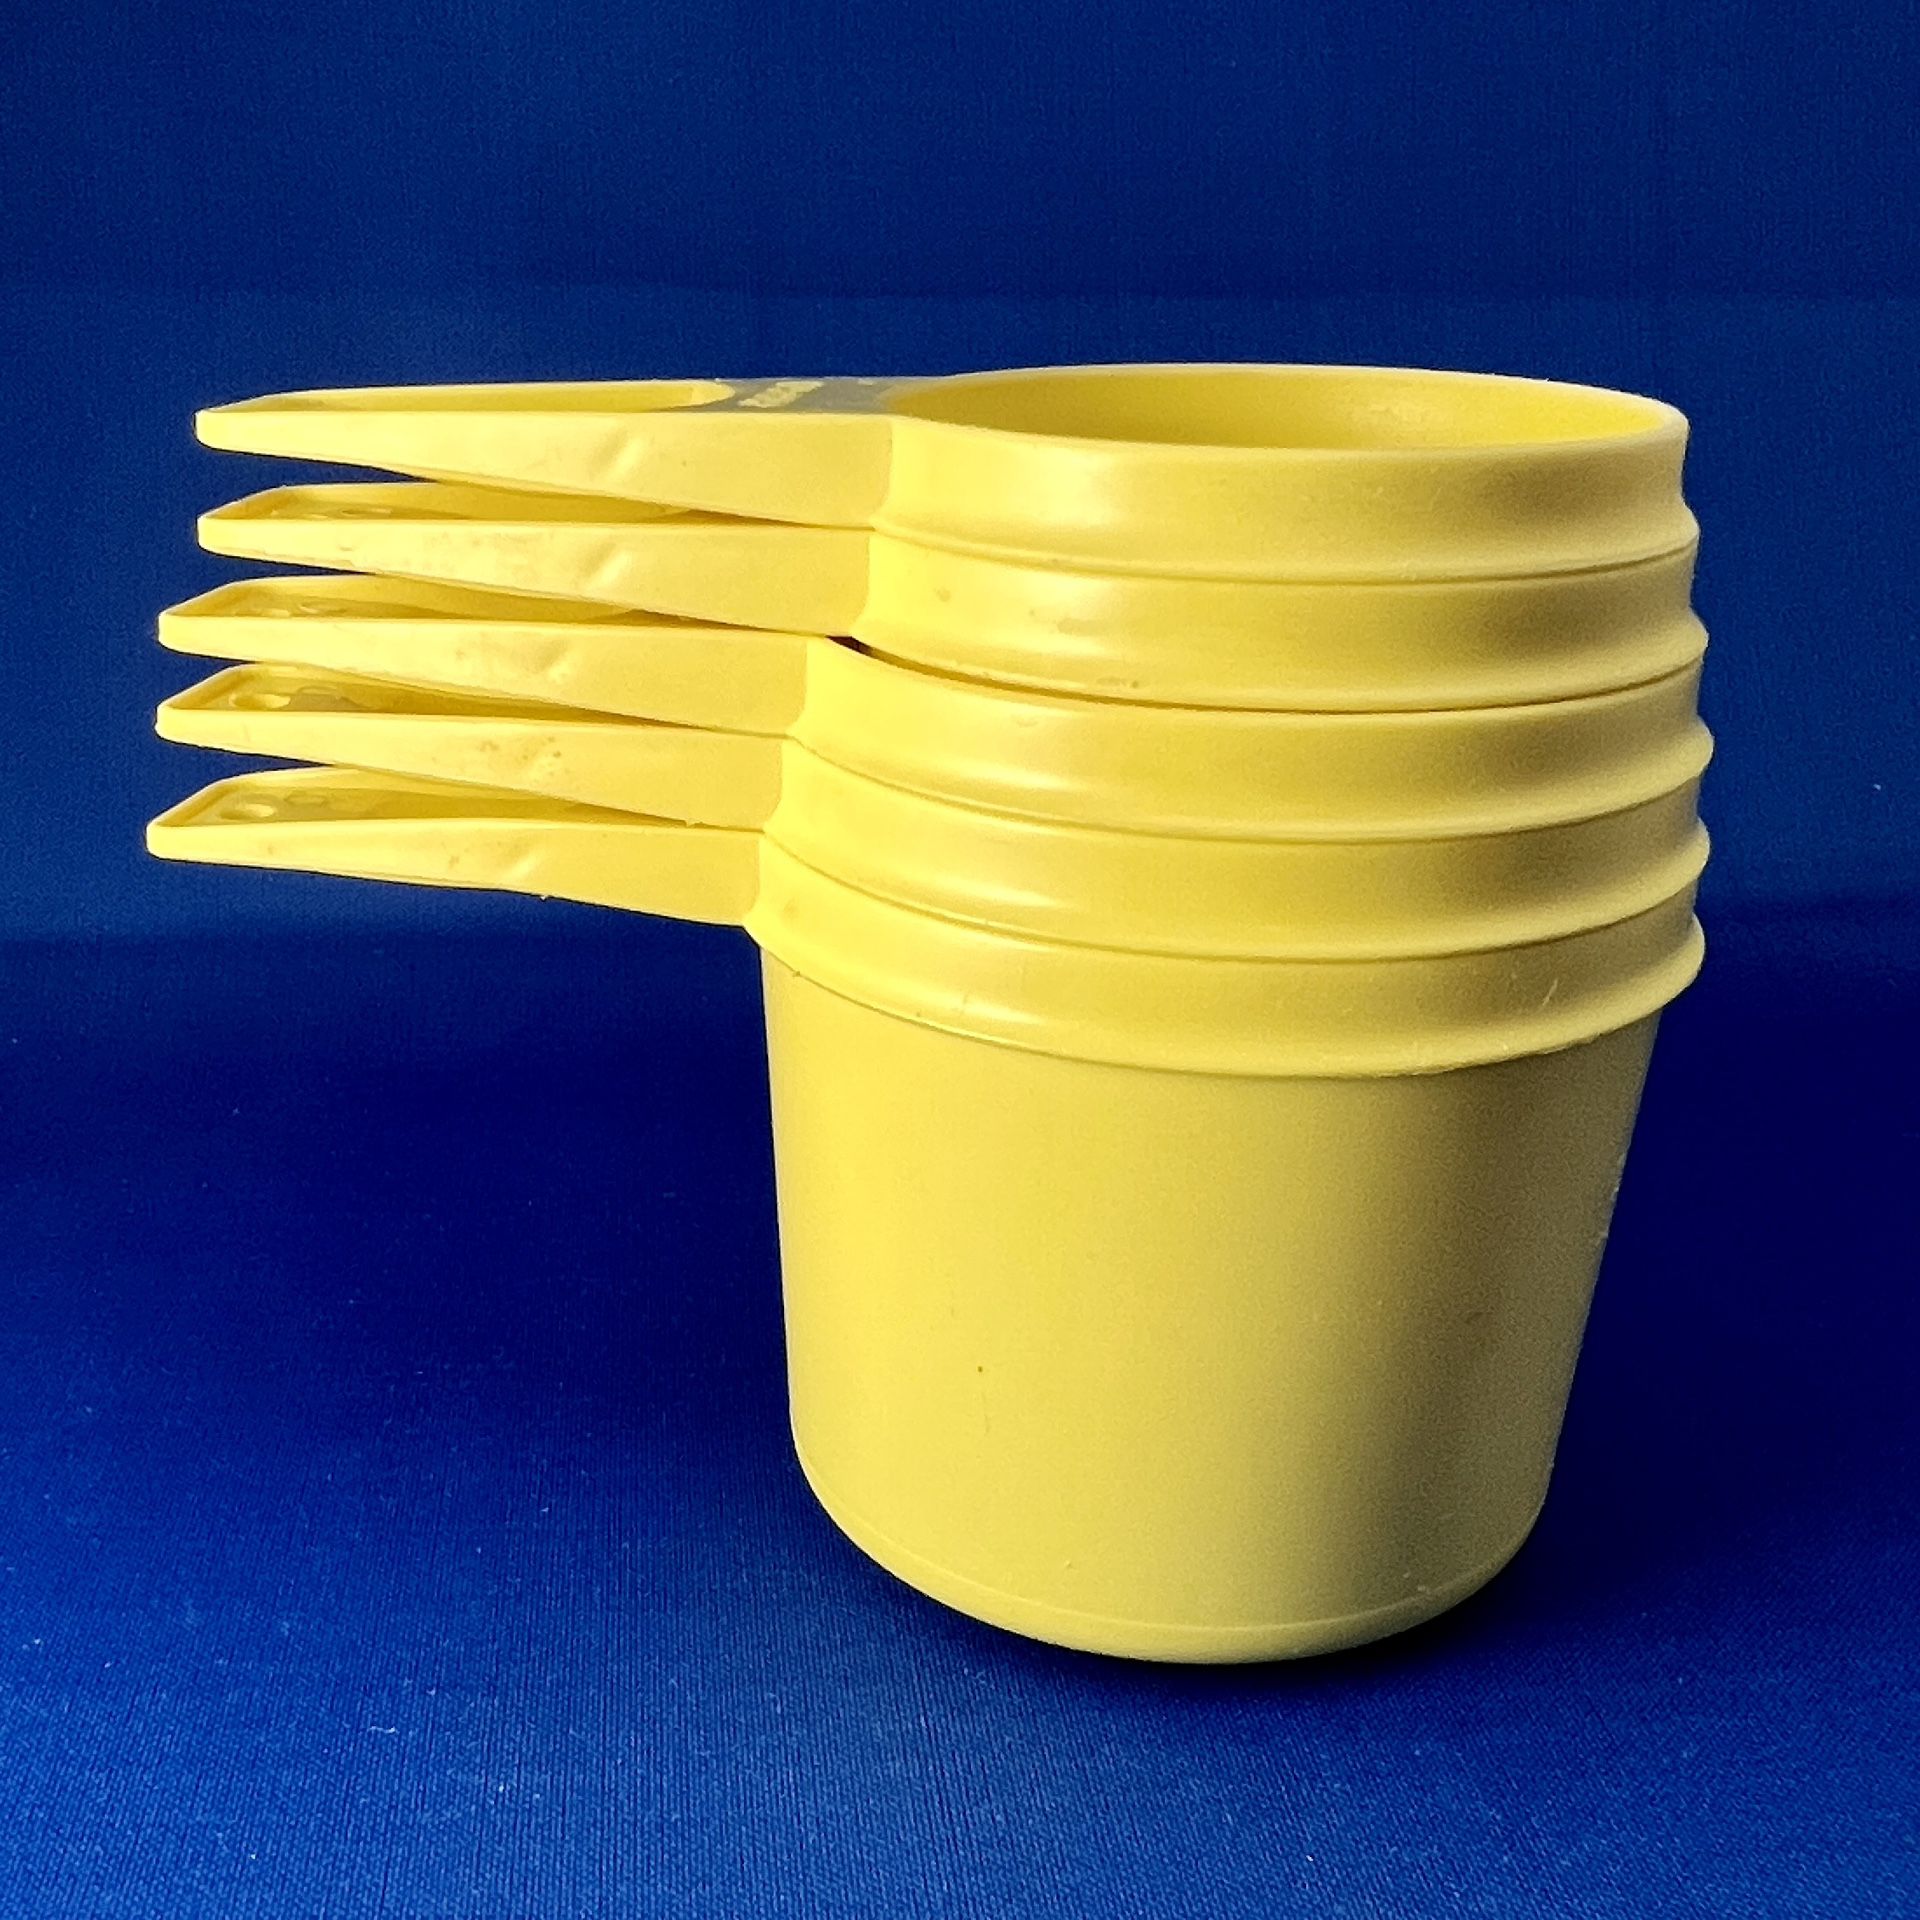 Tupperware Vintage Measuring Cup Set for Sale in Mount Prospect